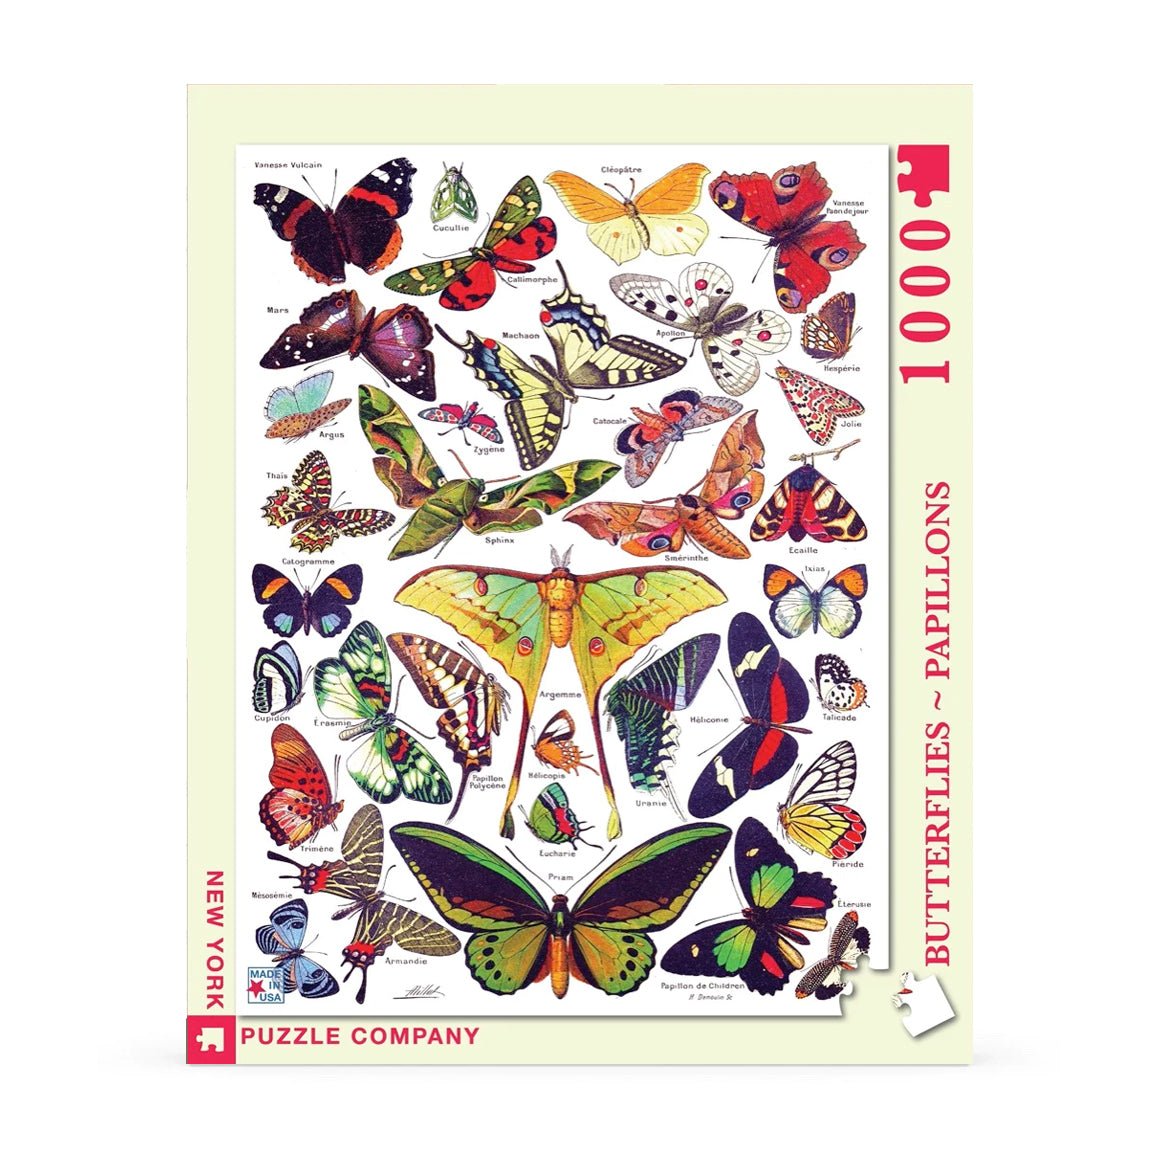 Puzzel Vintage Images Butterflies - Vlinders│New York Puzzle Company 1000 stukjes│art. PD633│voorkant verpakking